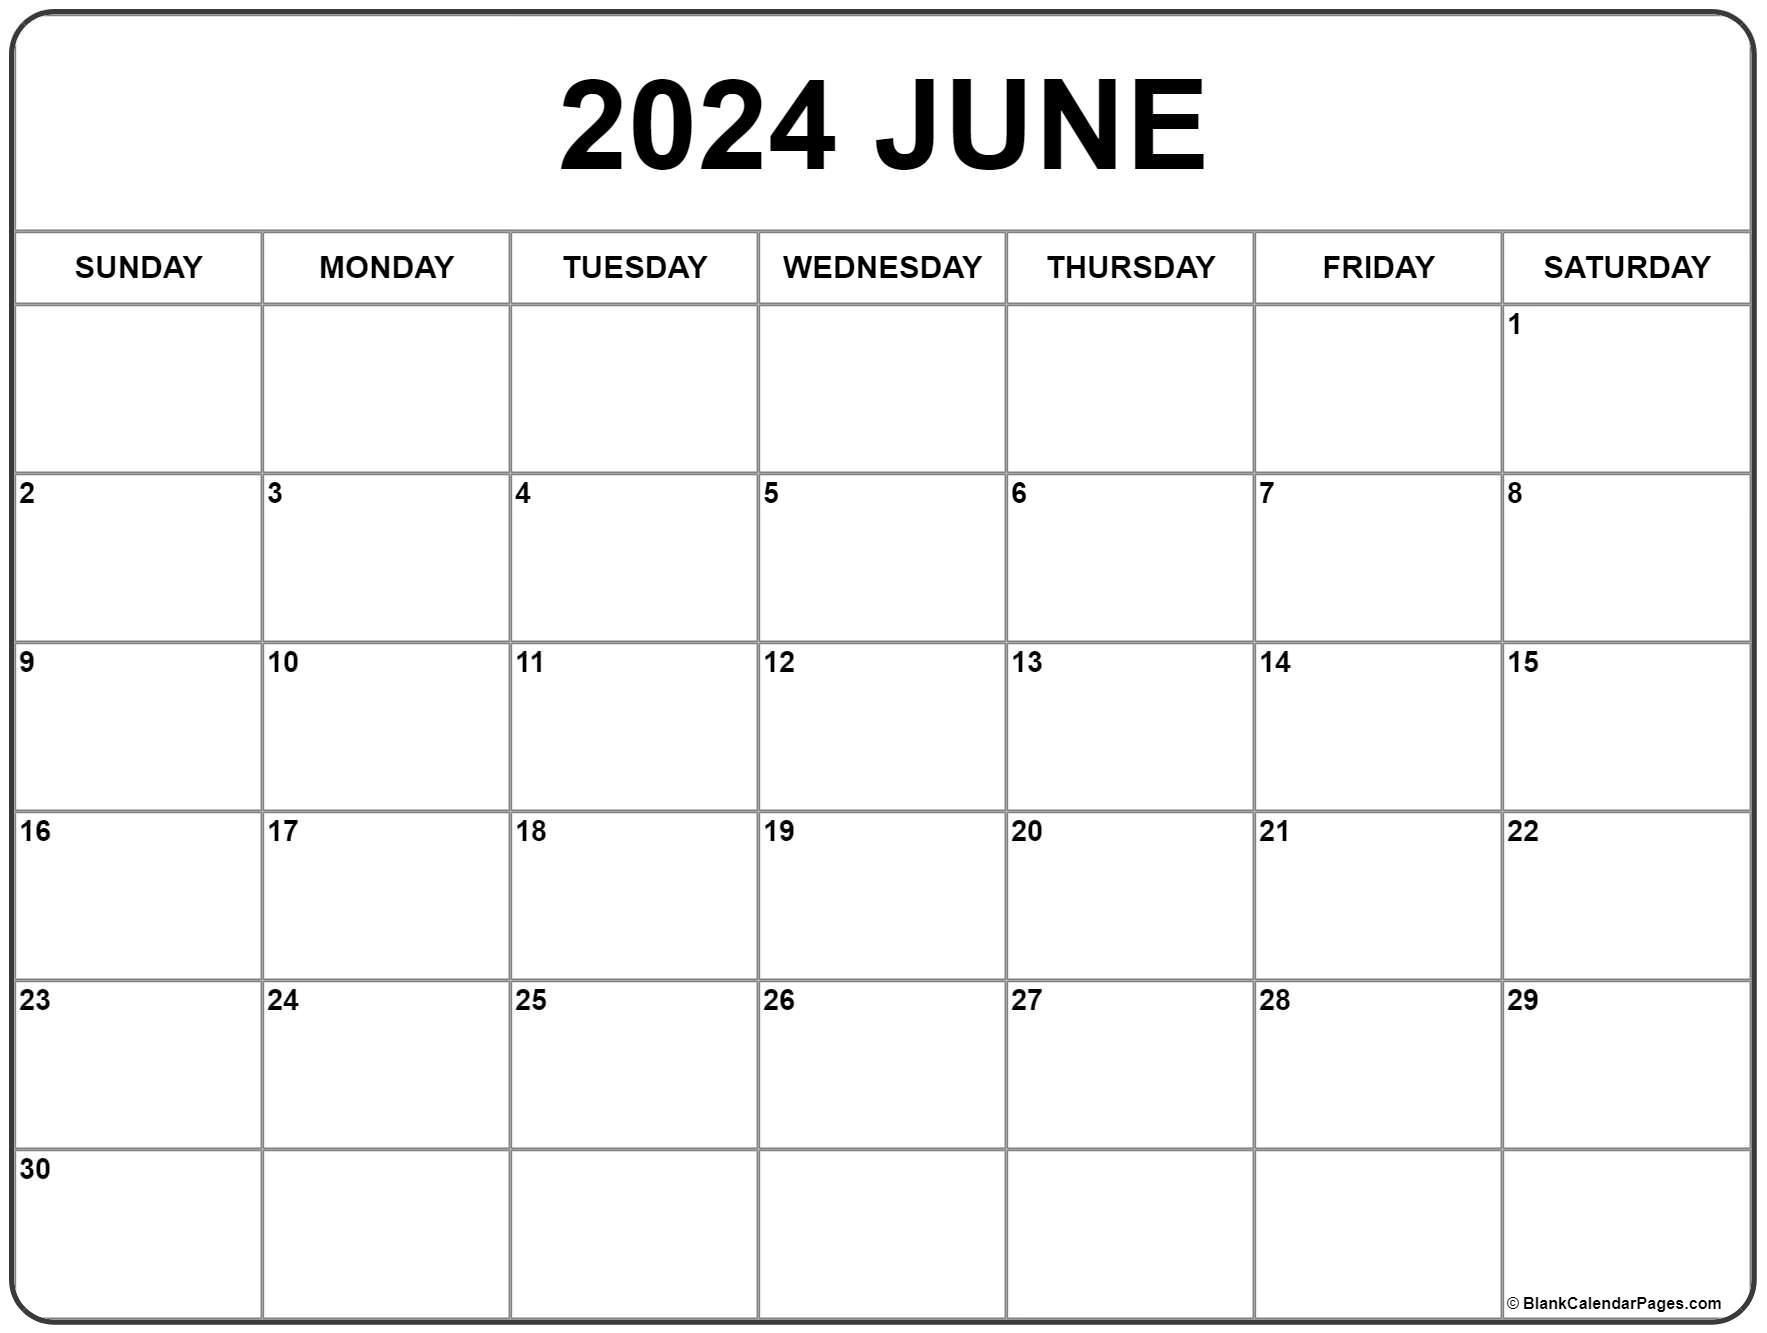 2021 Calendar June June 2021 calendar | free printable monthly calendars